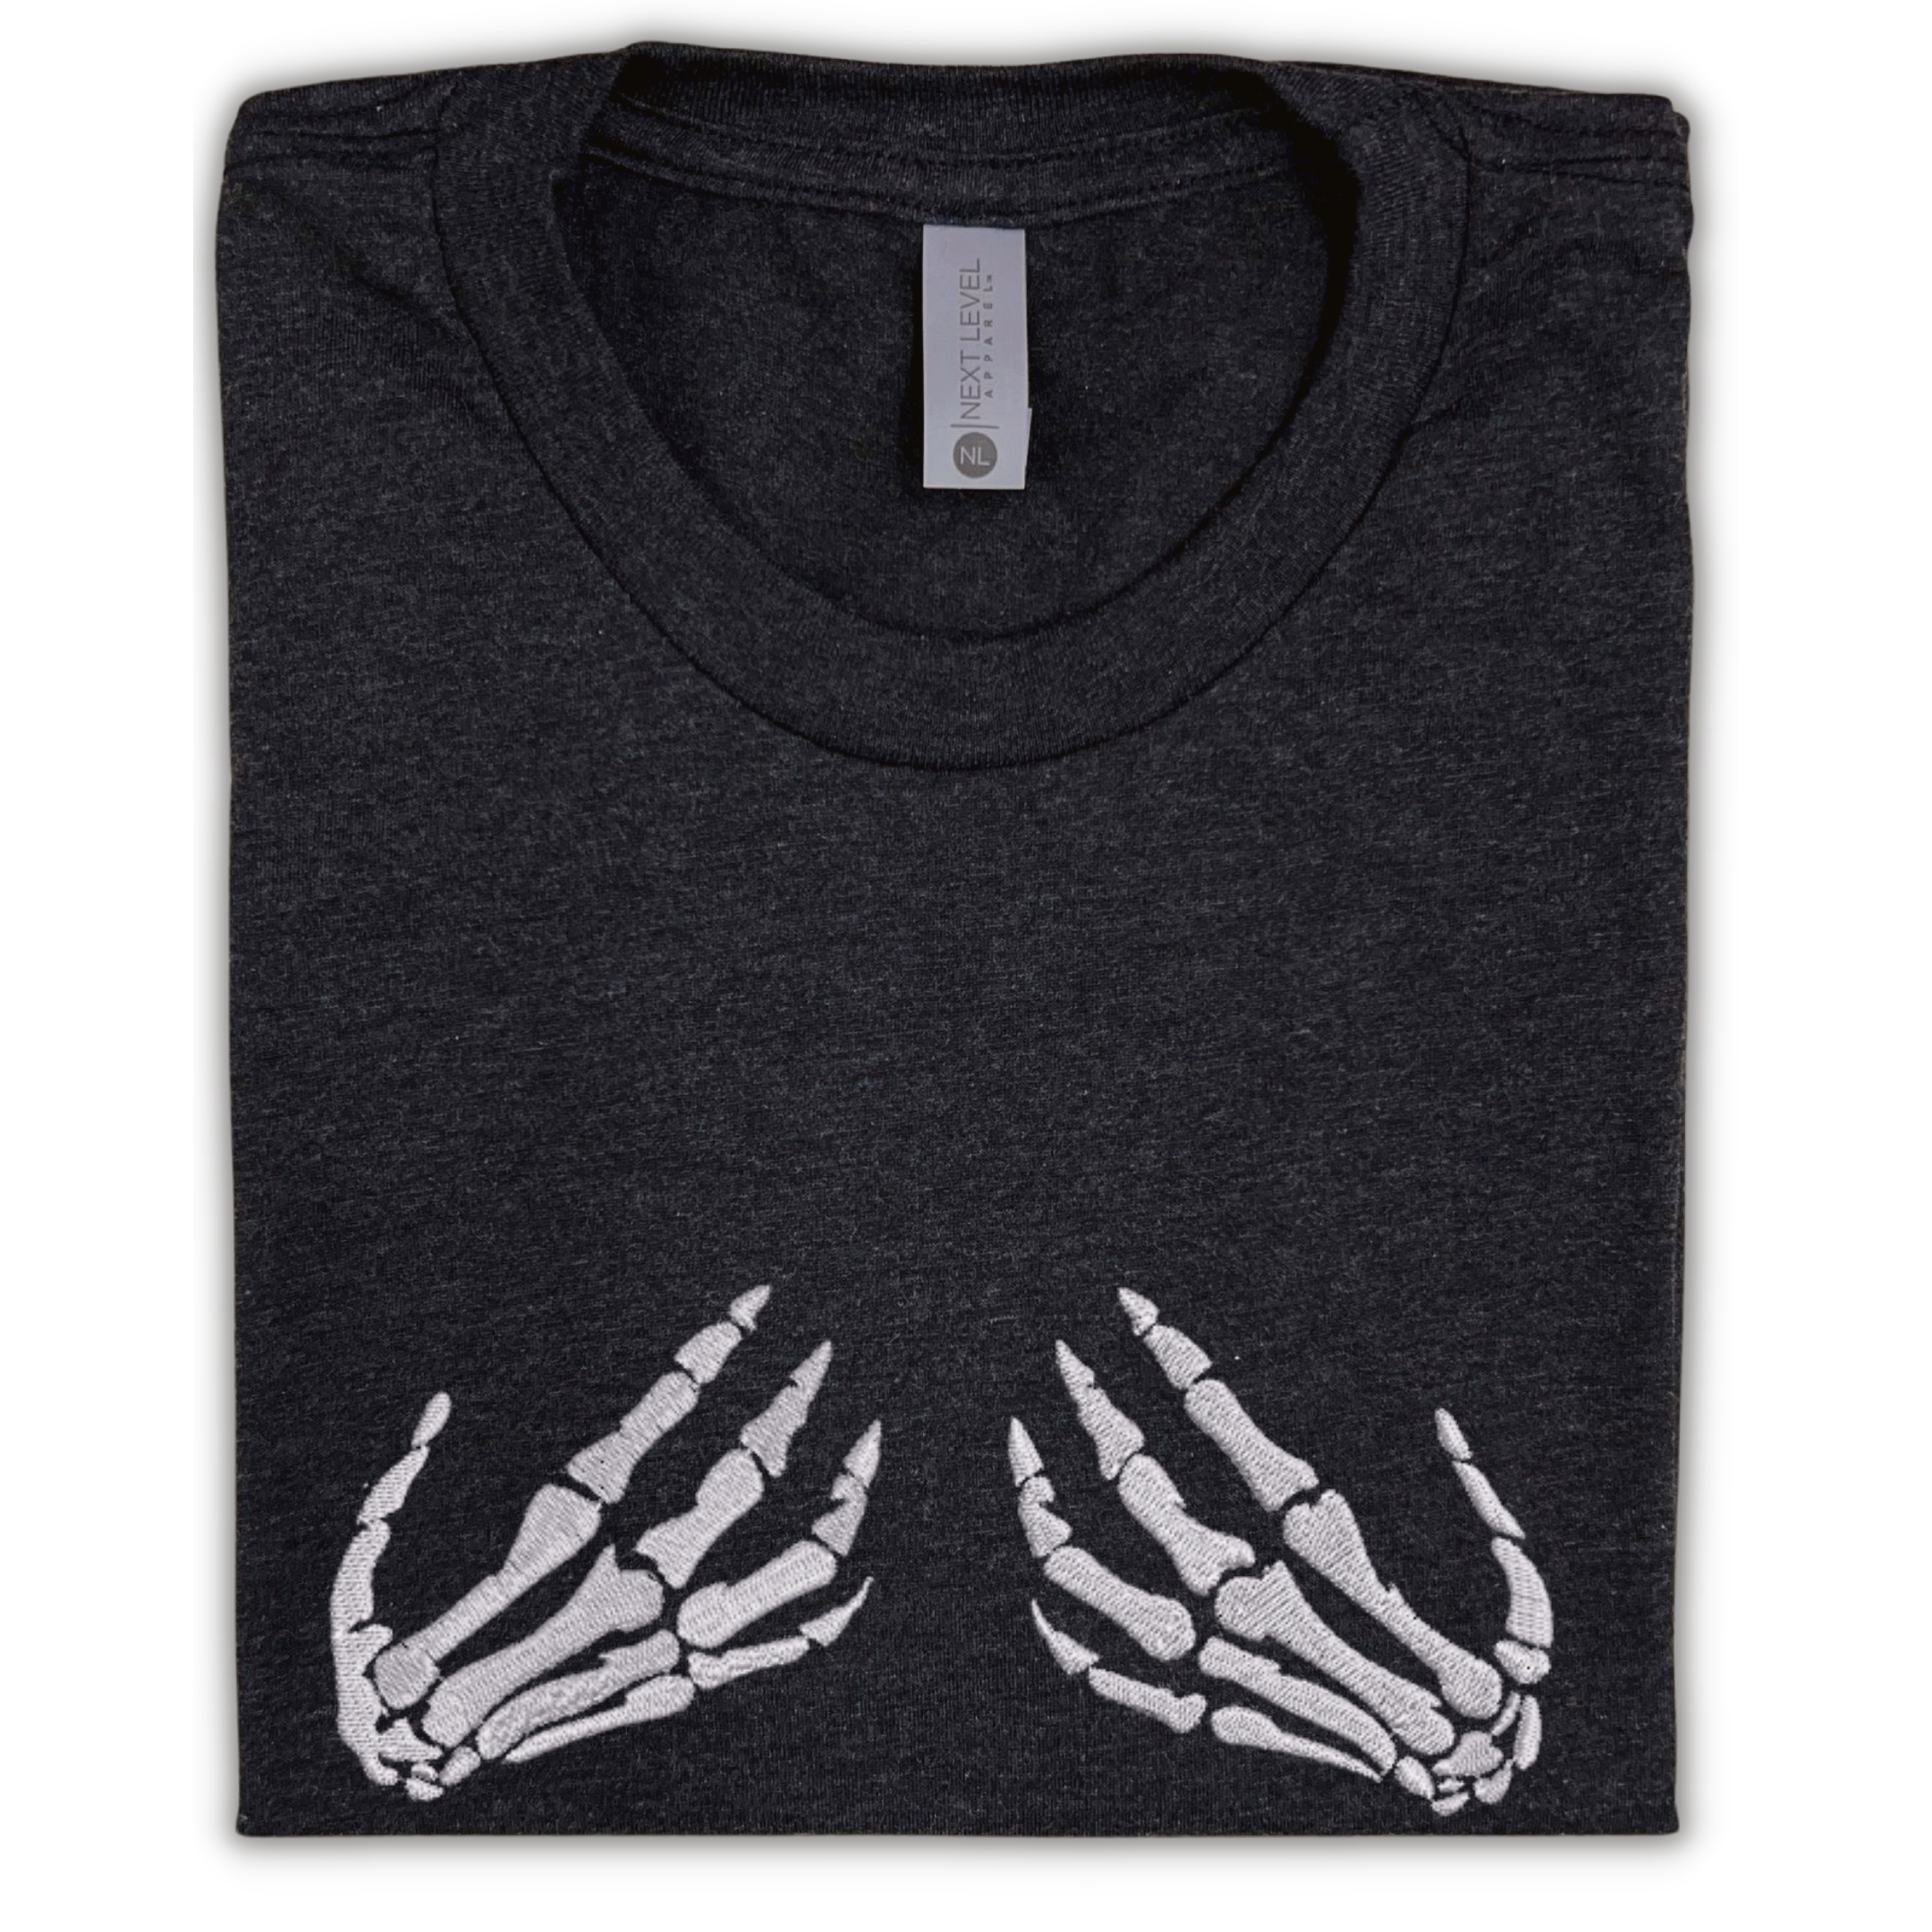 Handsy Skeleton Embroidered Black Tee Shirt Unisex